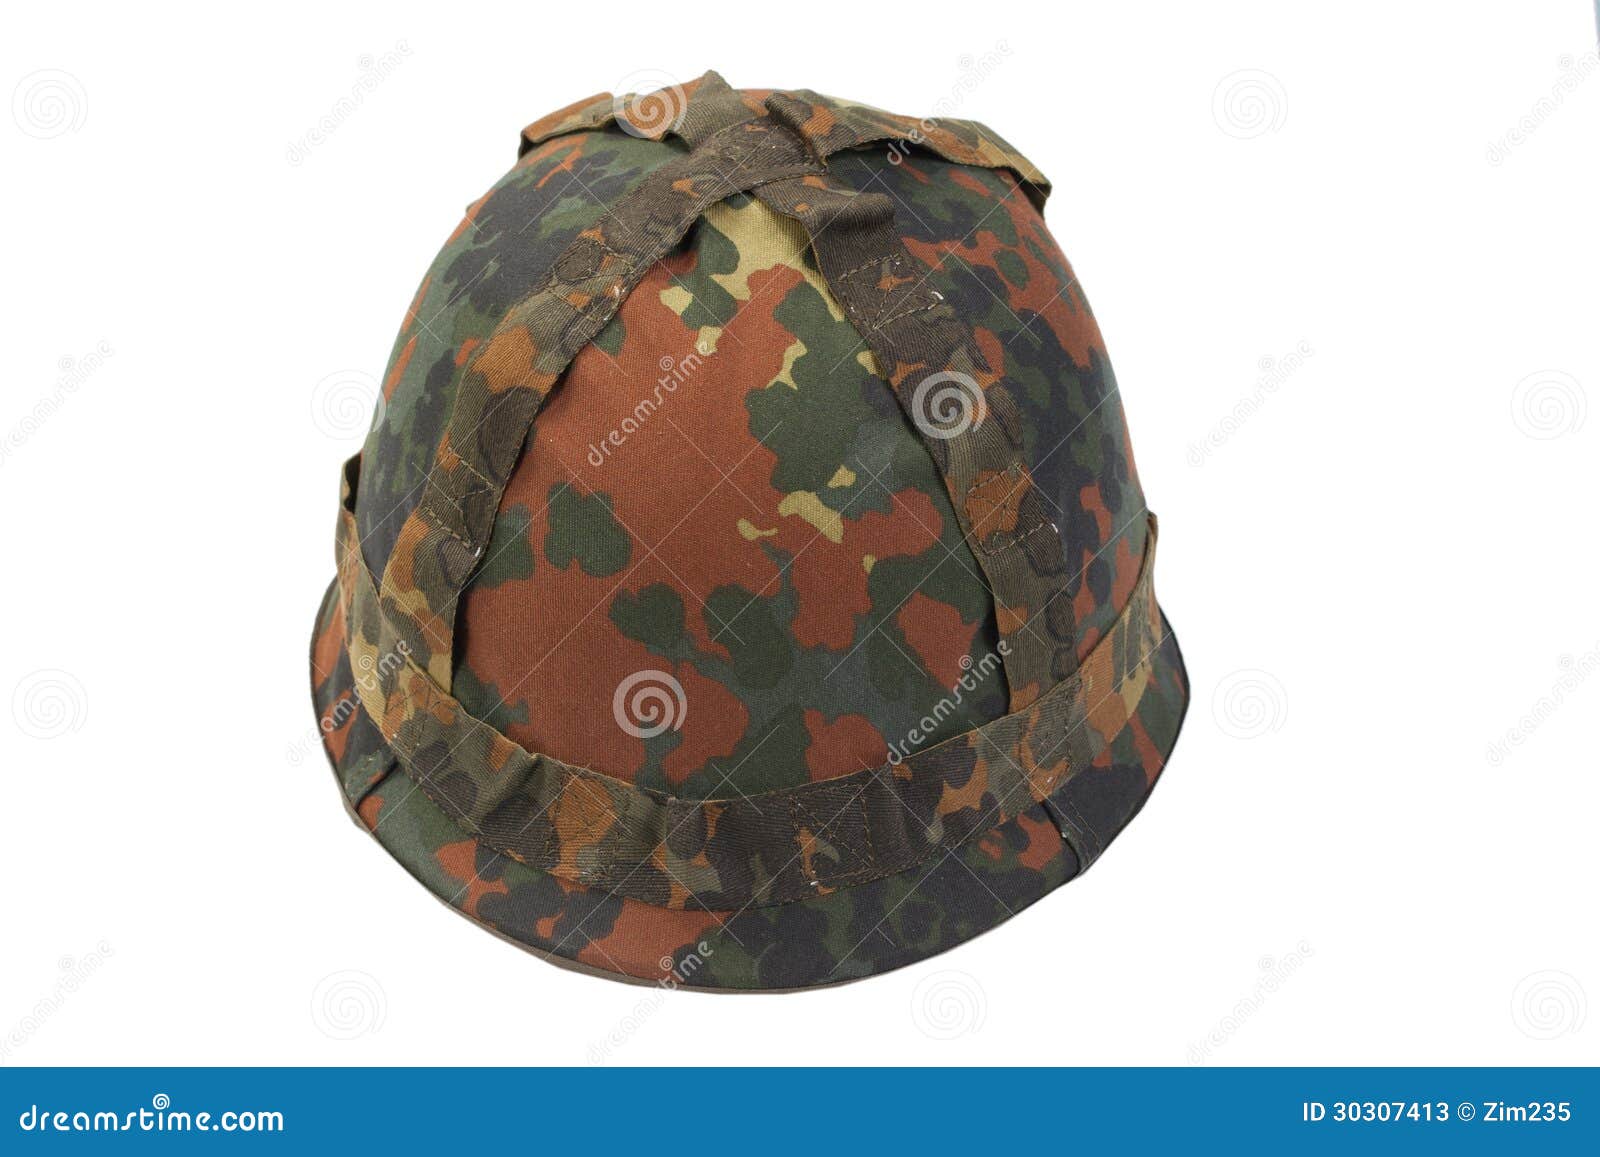 bundeswehr helmet with camouflage